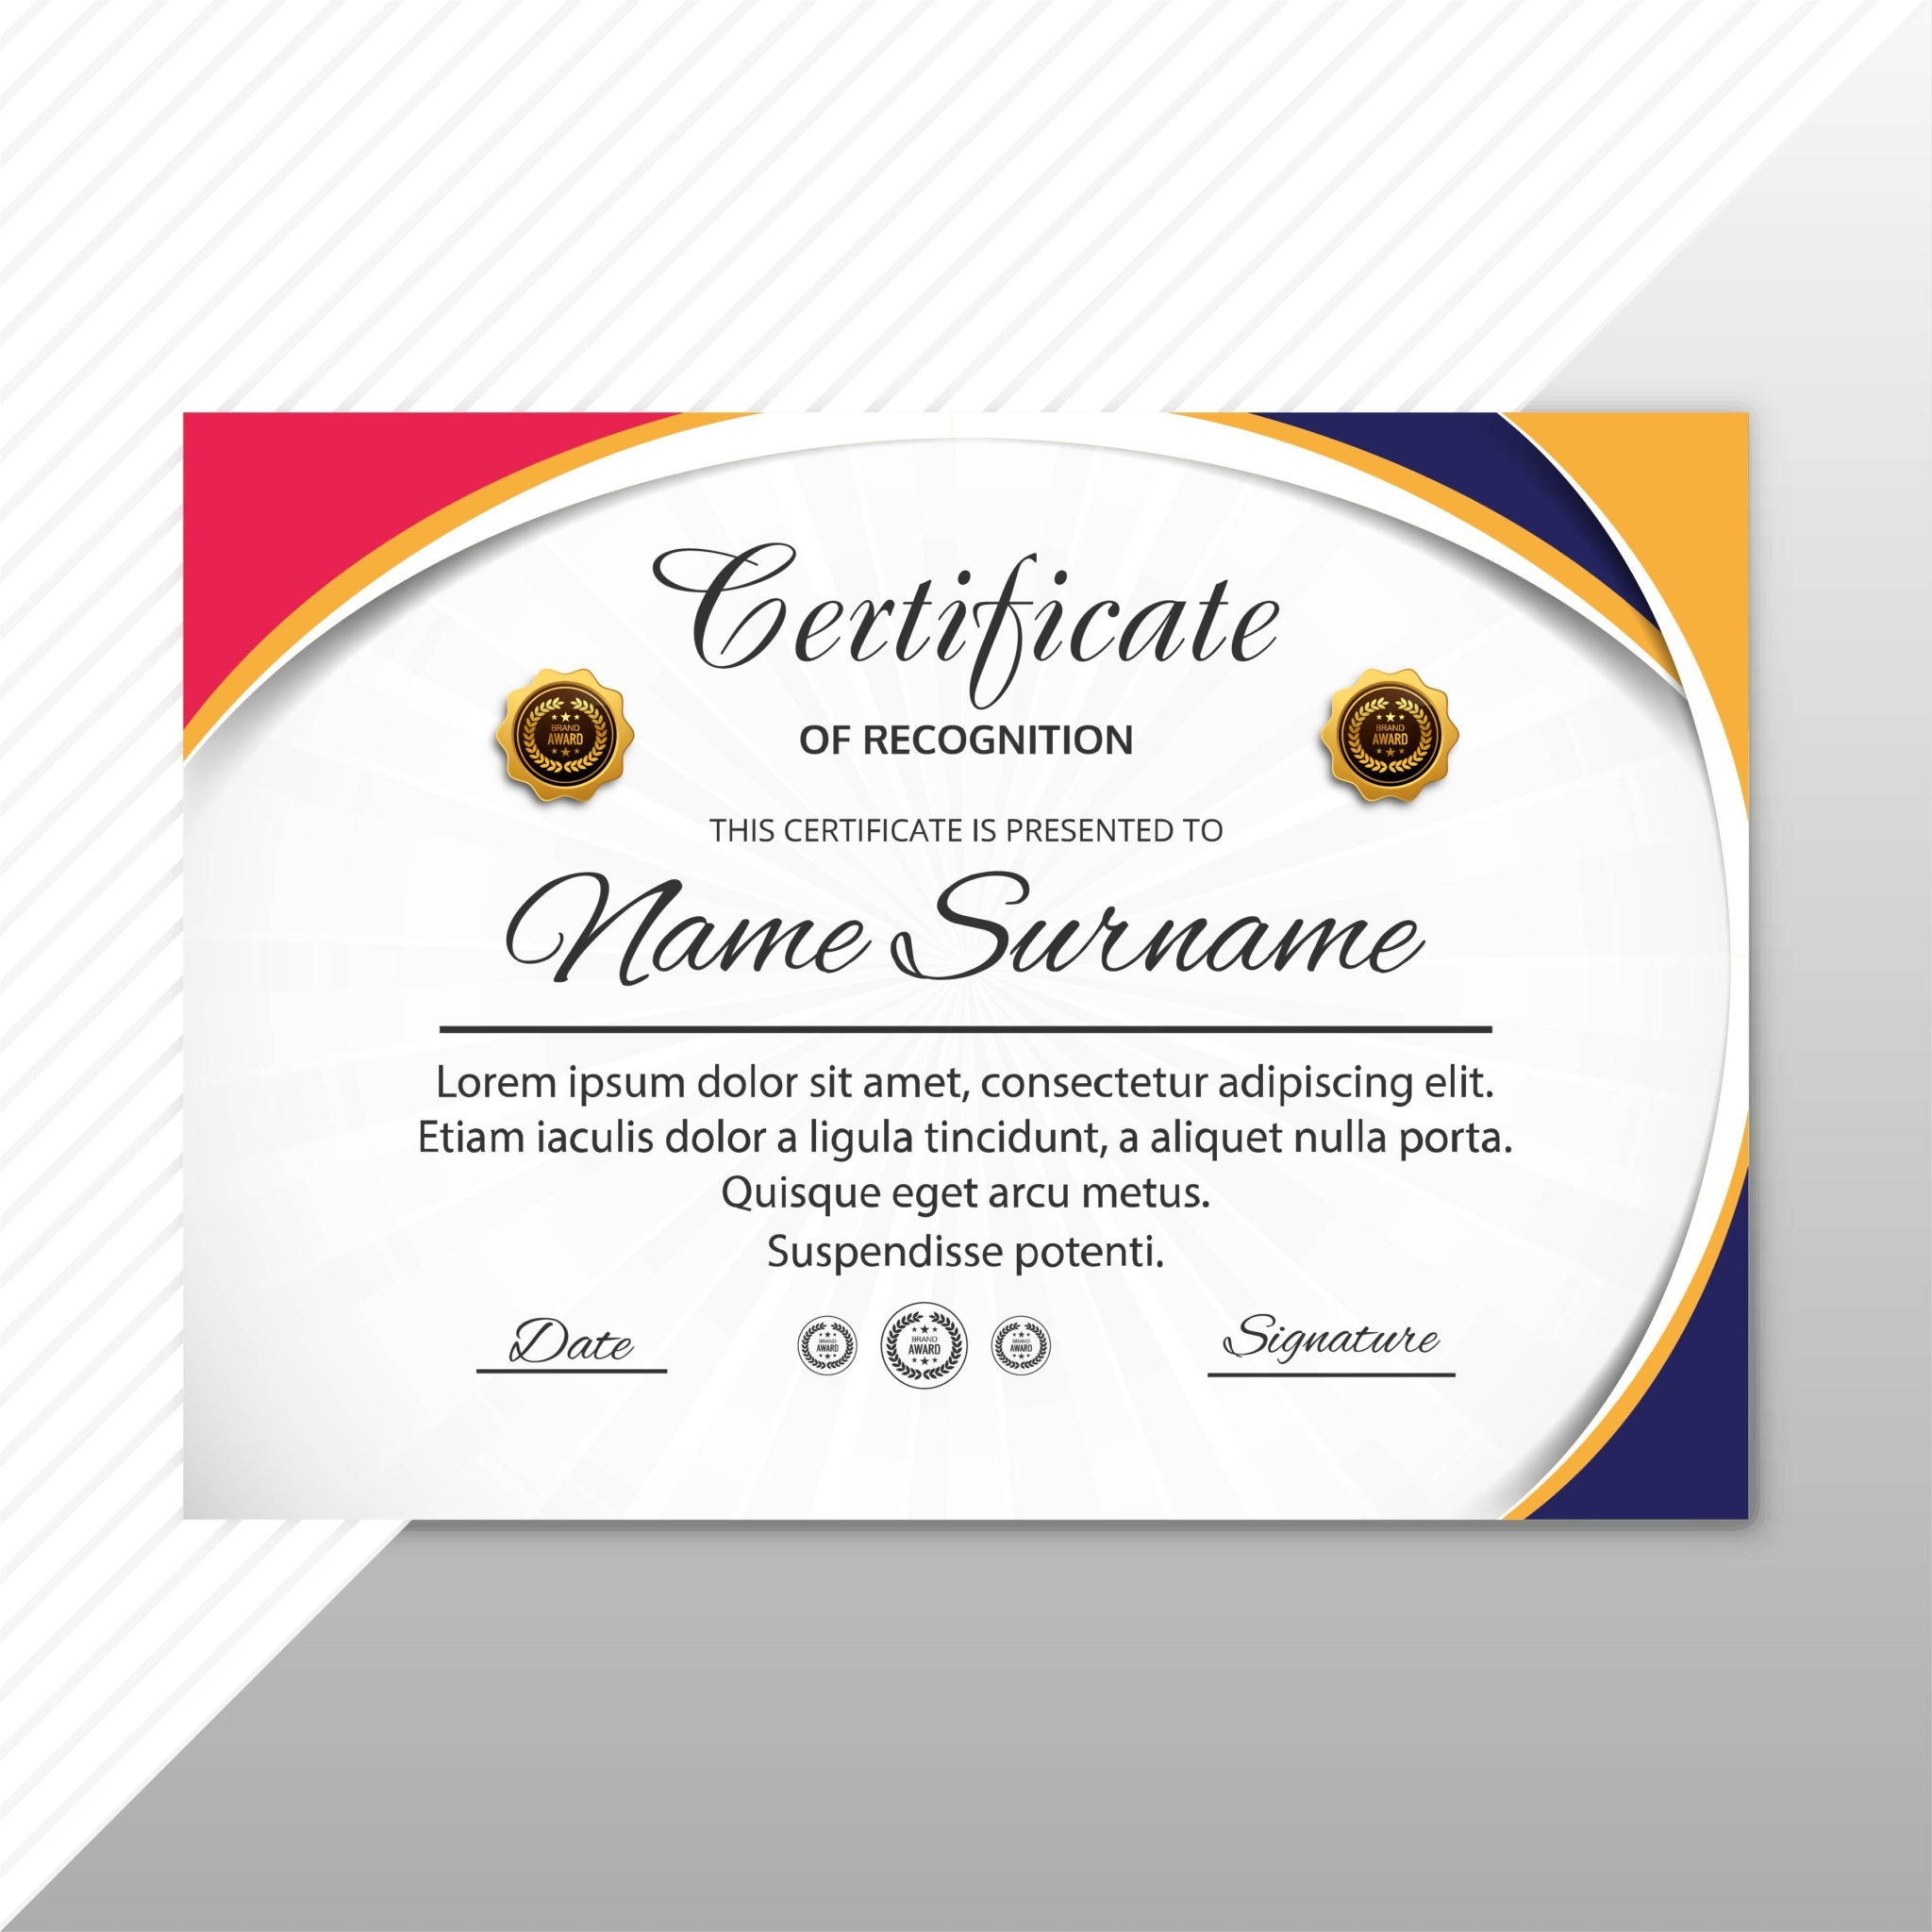 Simple Free Choir Certificate Templates 2020 Designs - Best within Choir Certificate Template